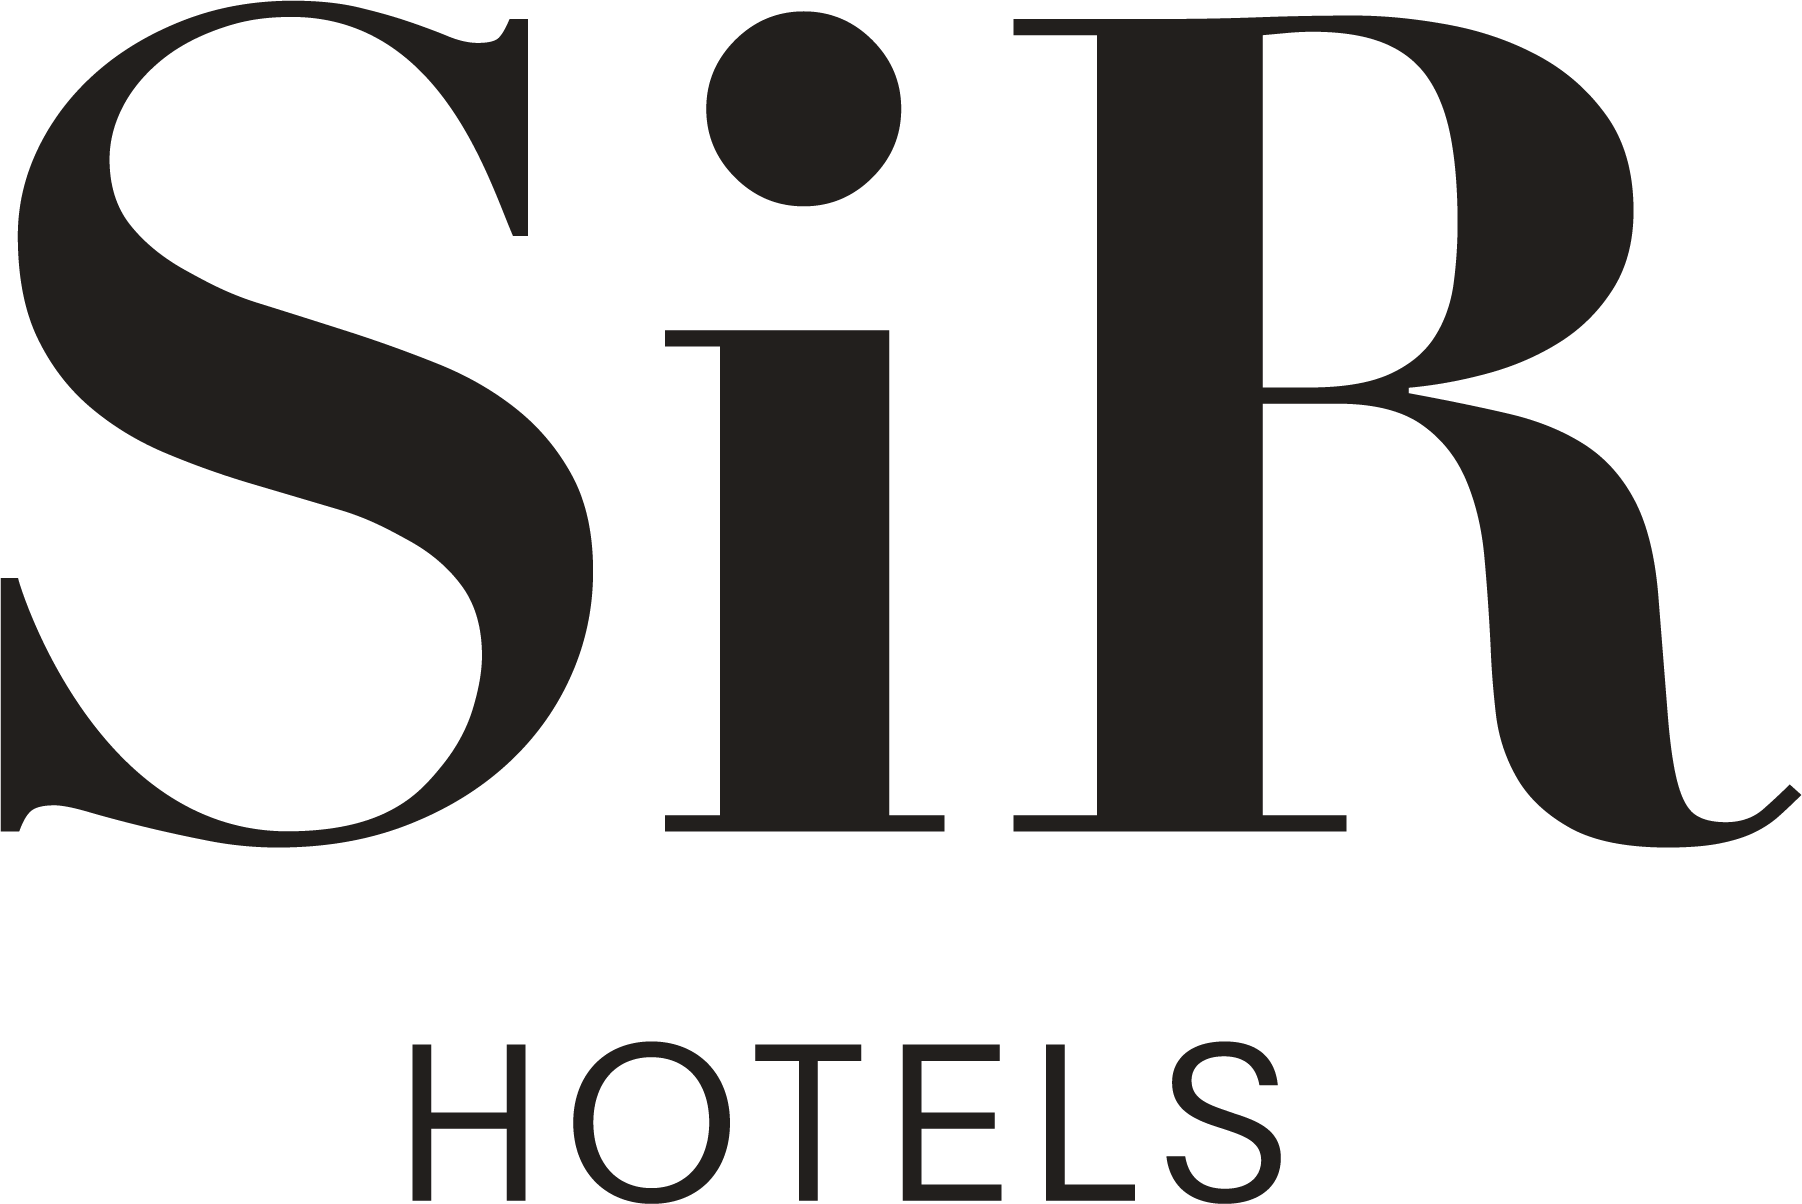 Sir hotels logo black